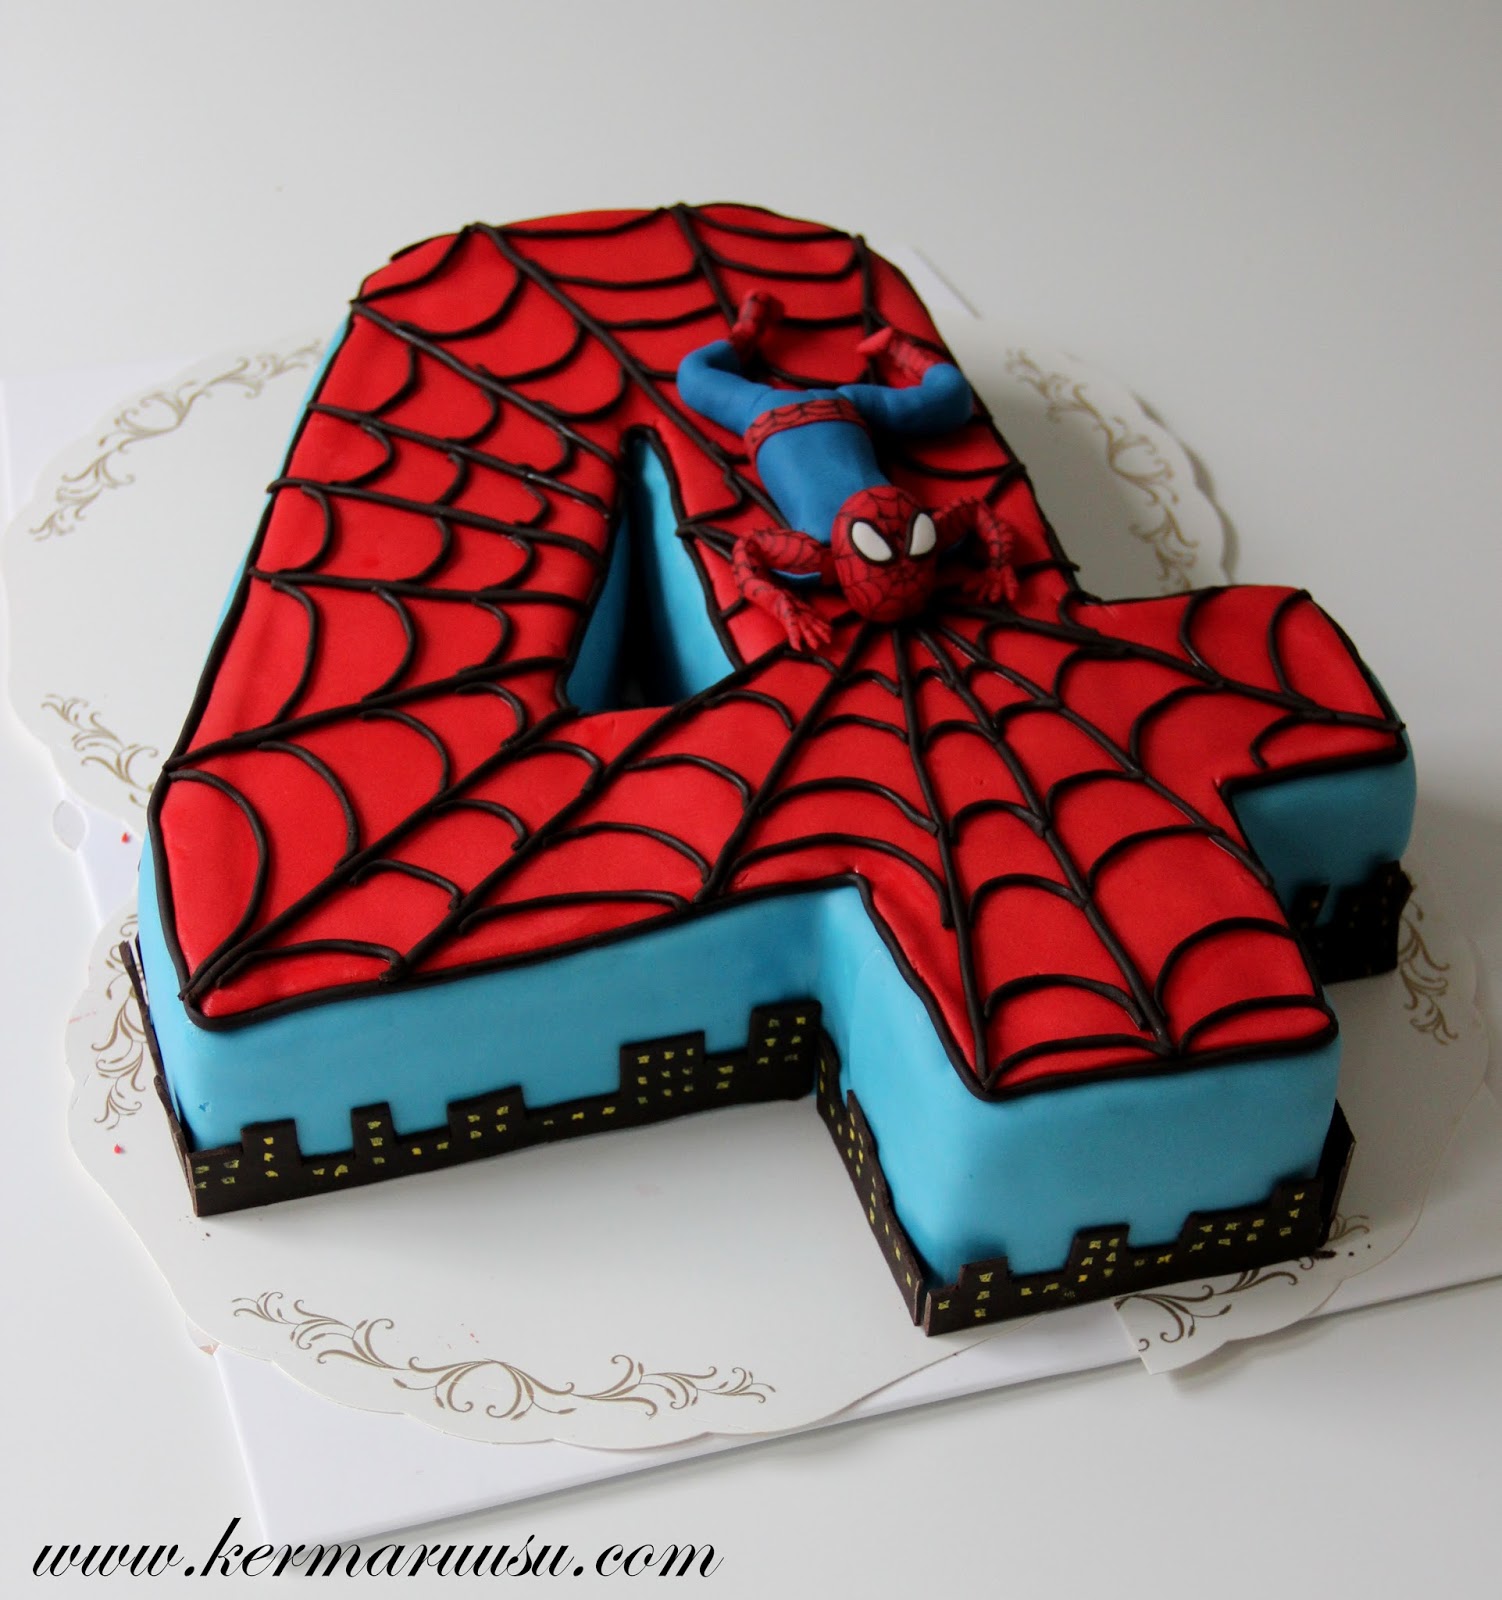 Spiderman Age Cake